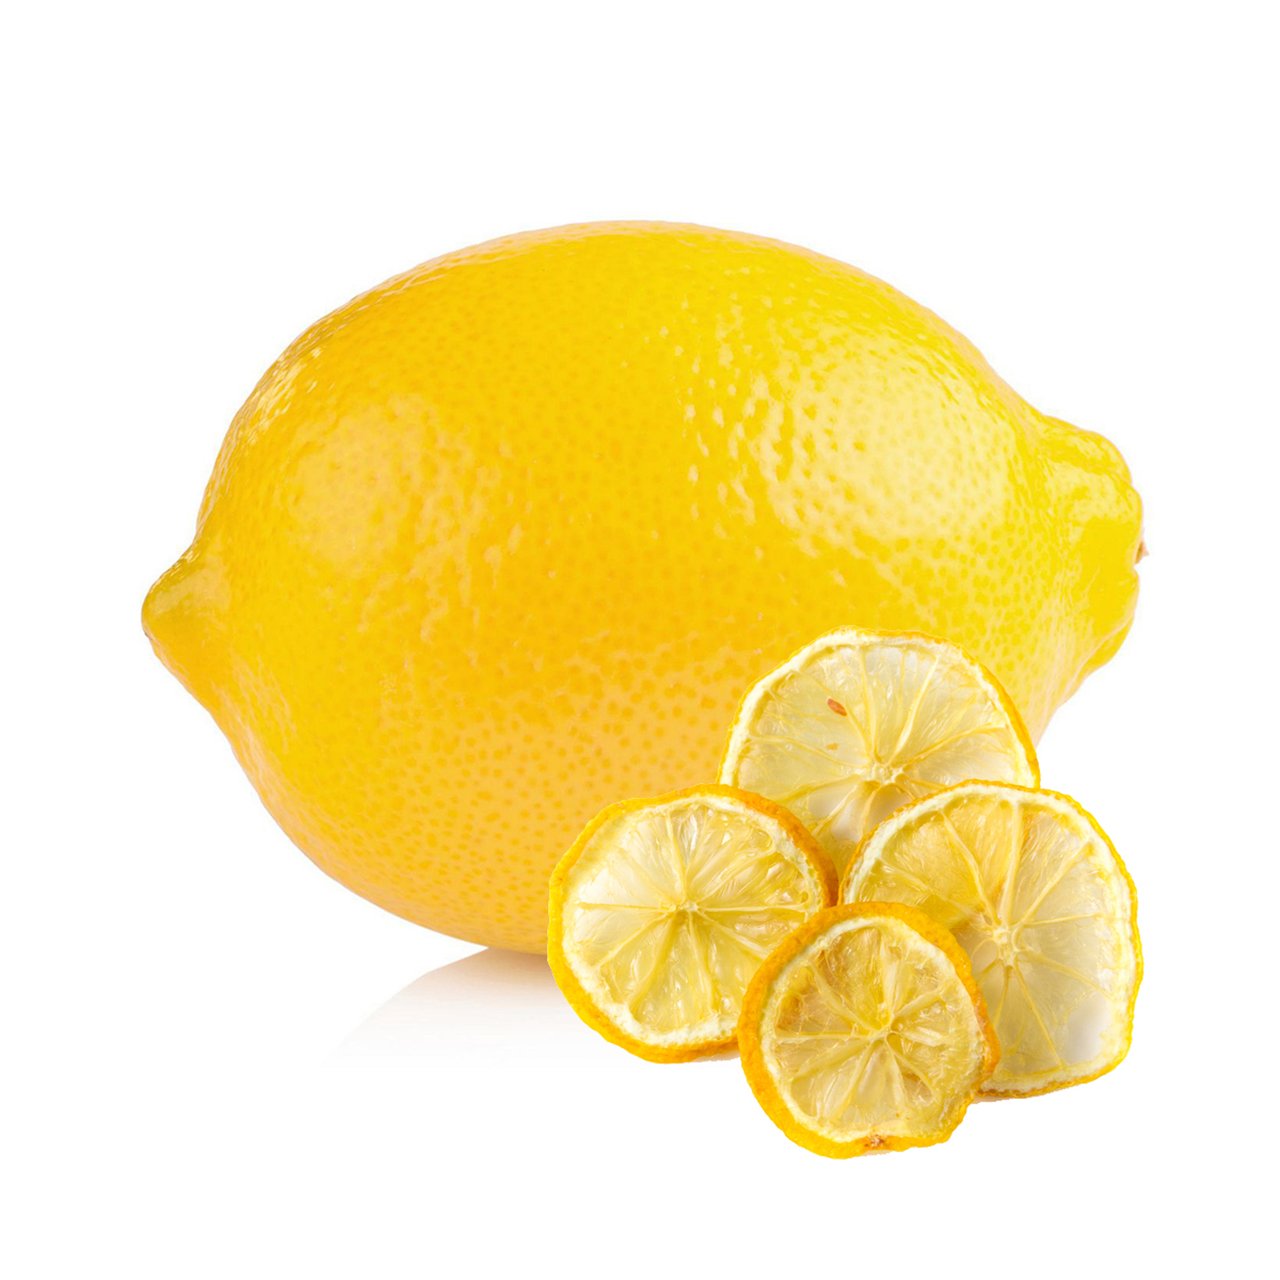 Limon Cipsi - Meyve Cipsi - Meyve Cipsleri - Kuru Meyve Cipsi